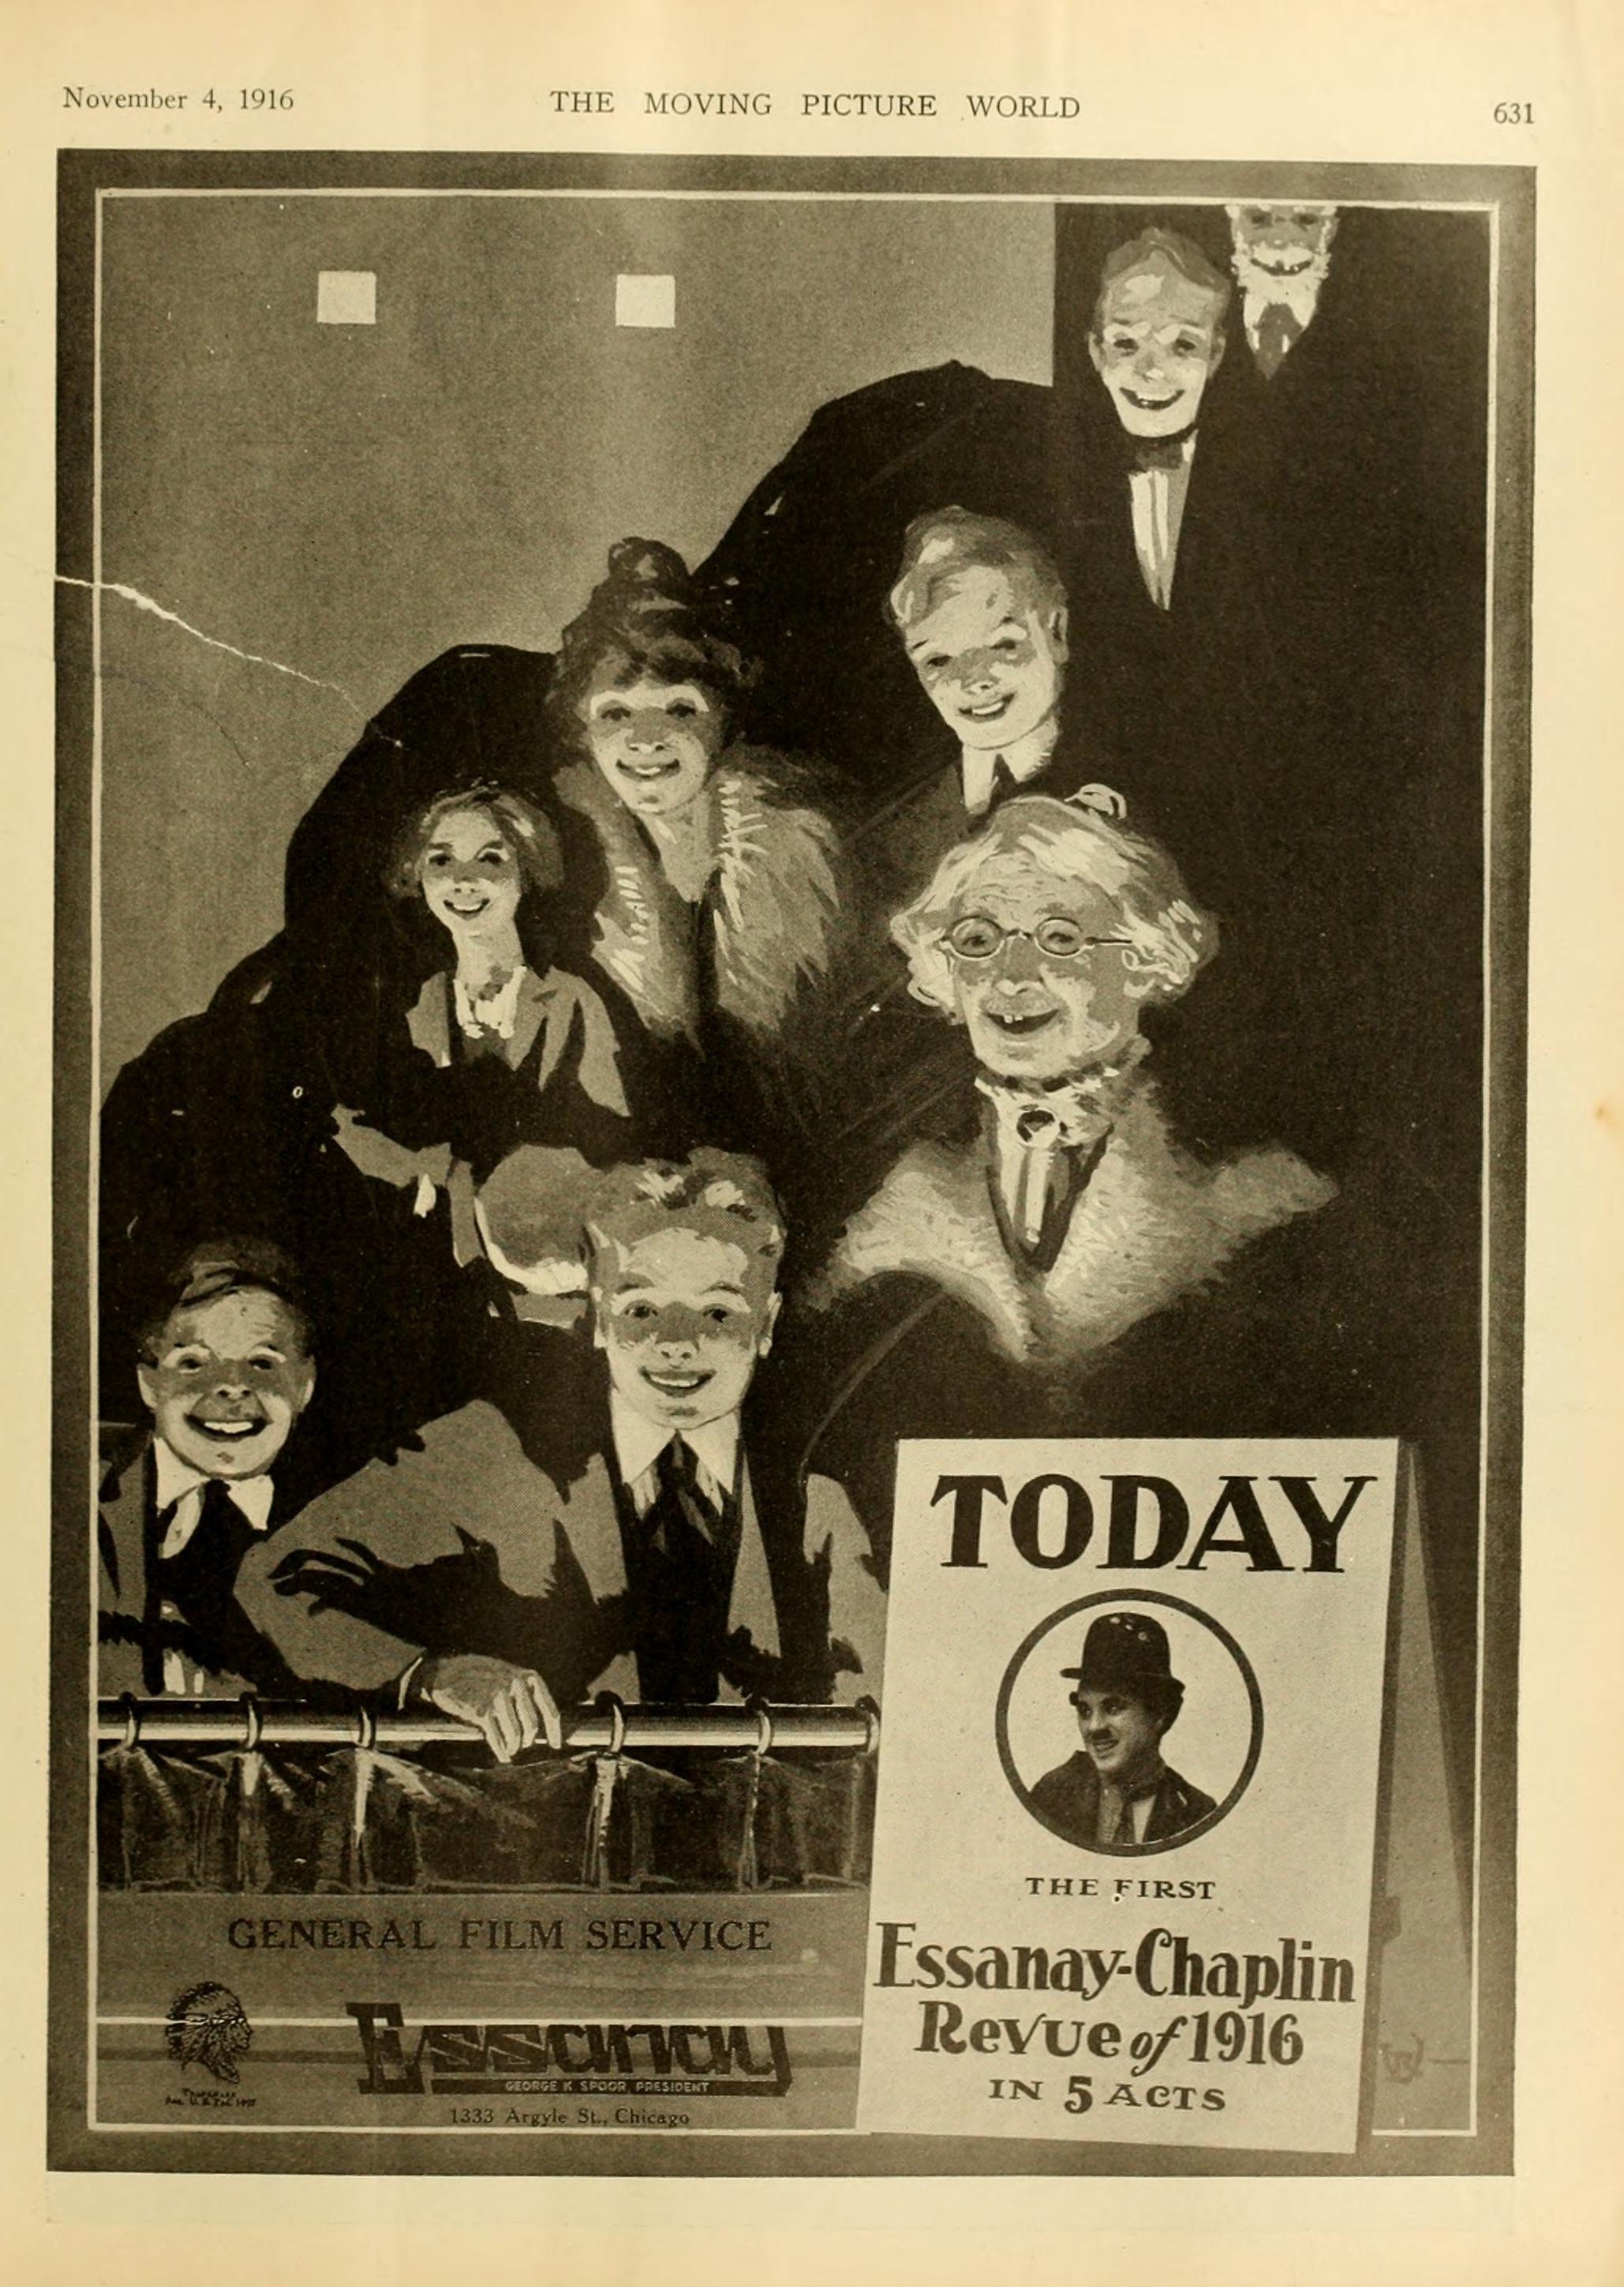 The Essanay-Chaplin Revue of 1916, Moving Picture World magazine, Nov 4, p.631